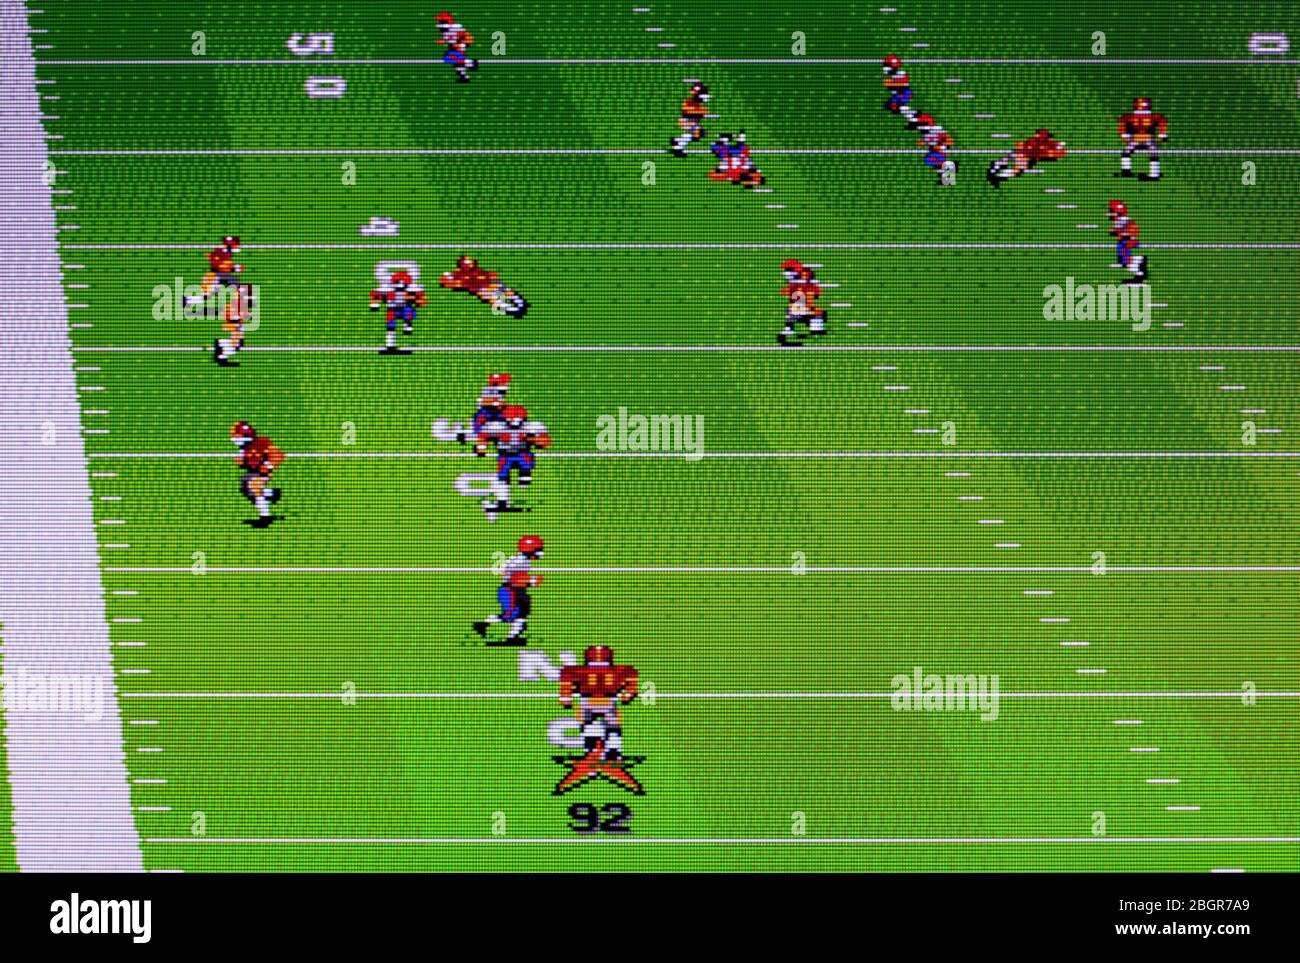 John Madden Football '93 - Sega Genesis Mega Drive - Editorial use only Stock Photo